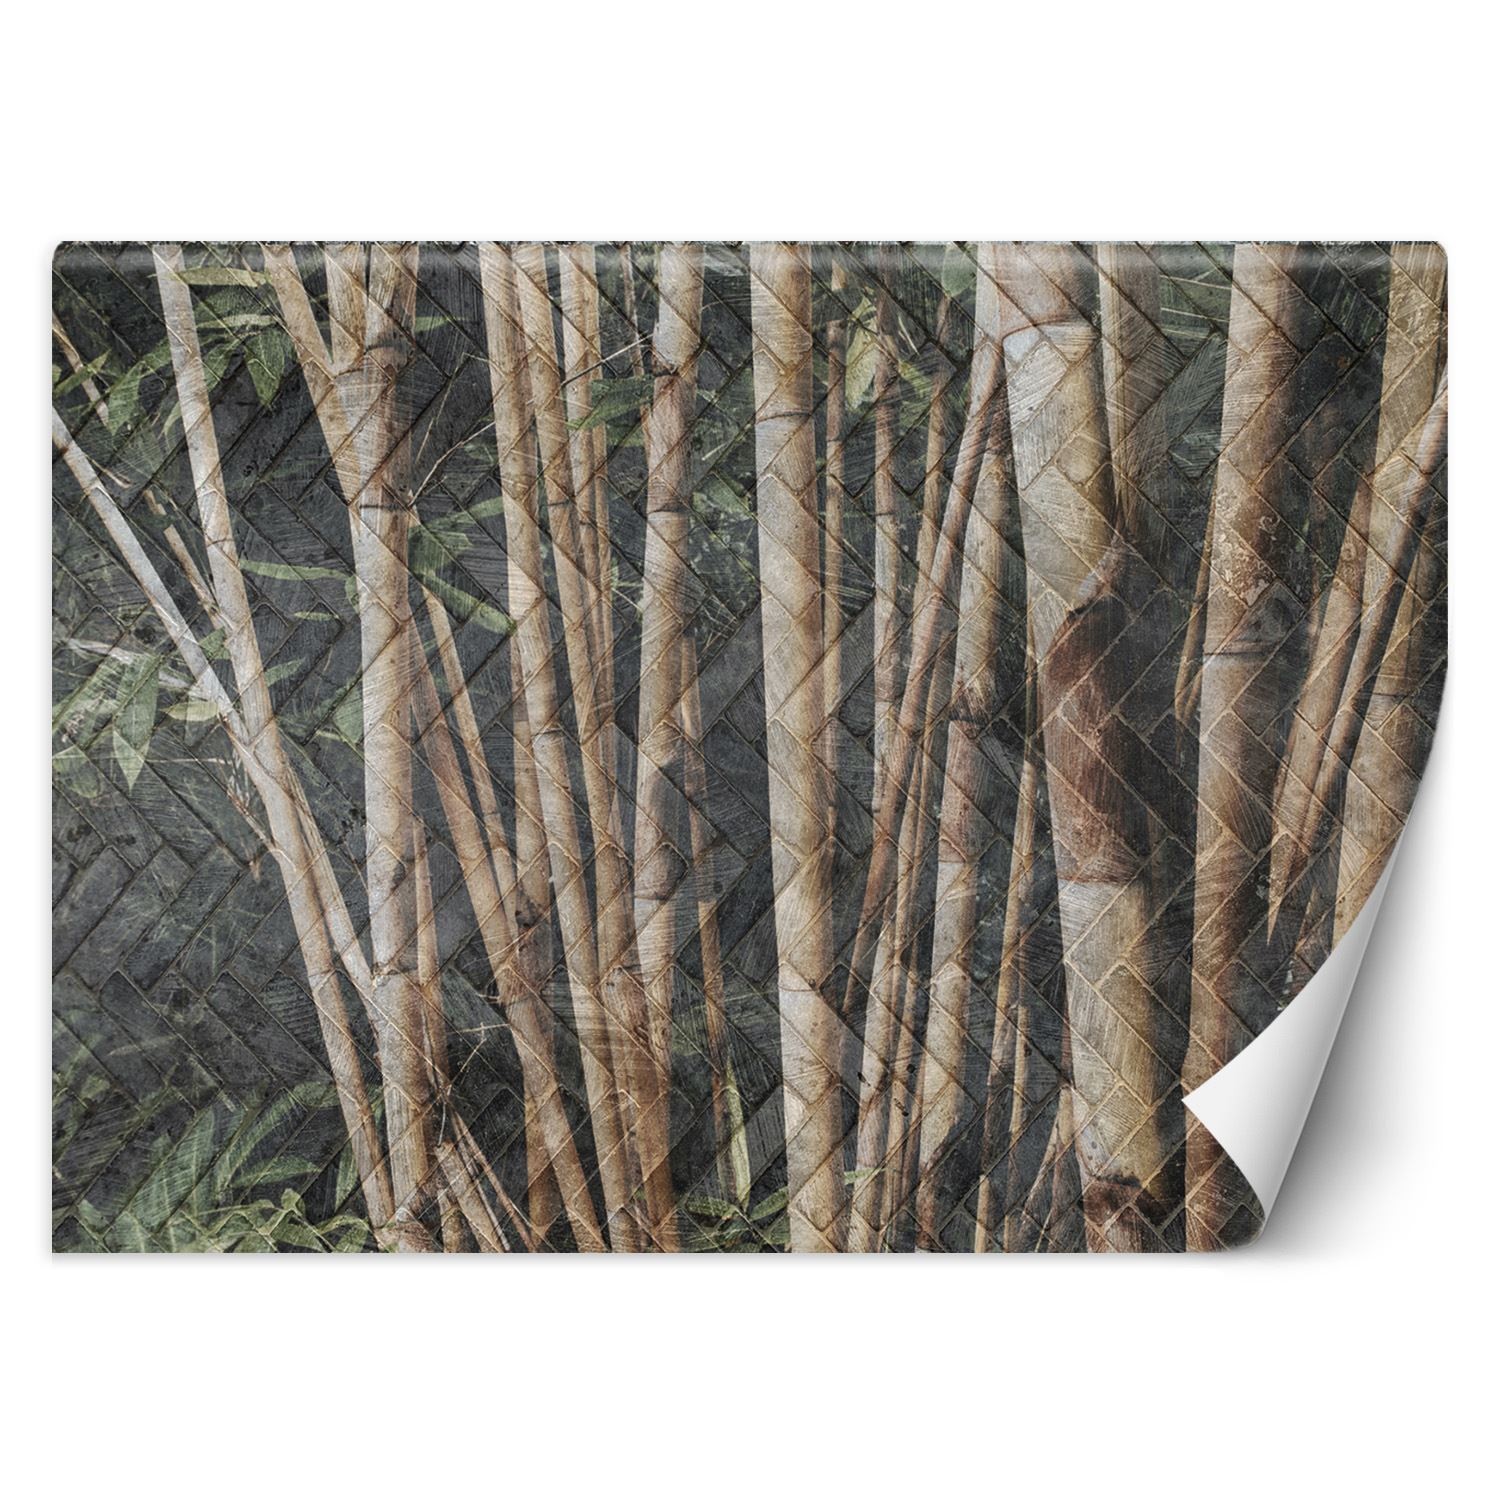 Trend24 – Behang – Bamboo Forest – Behangpapier – Behang Woonkamer – Fotobehang – 450x315x2 cm – Incl. behanglijm